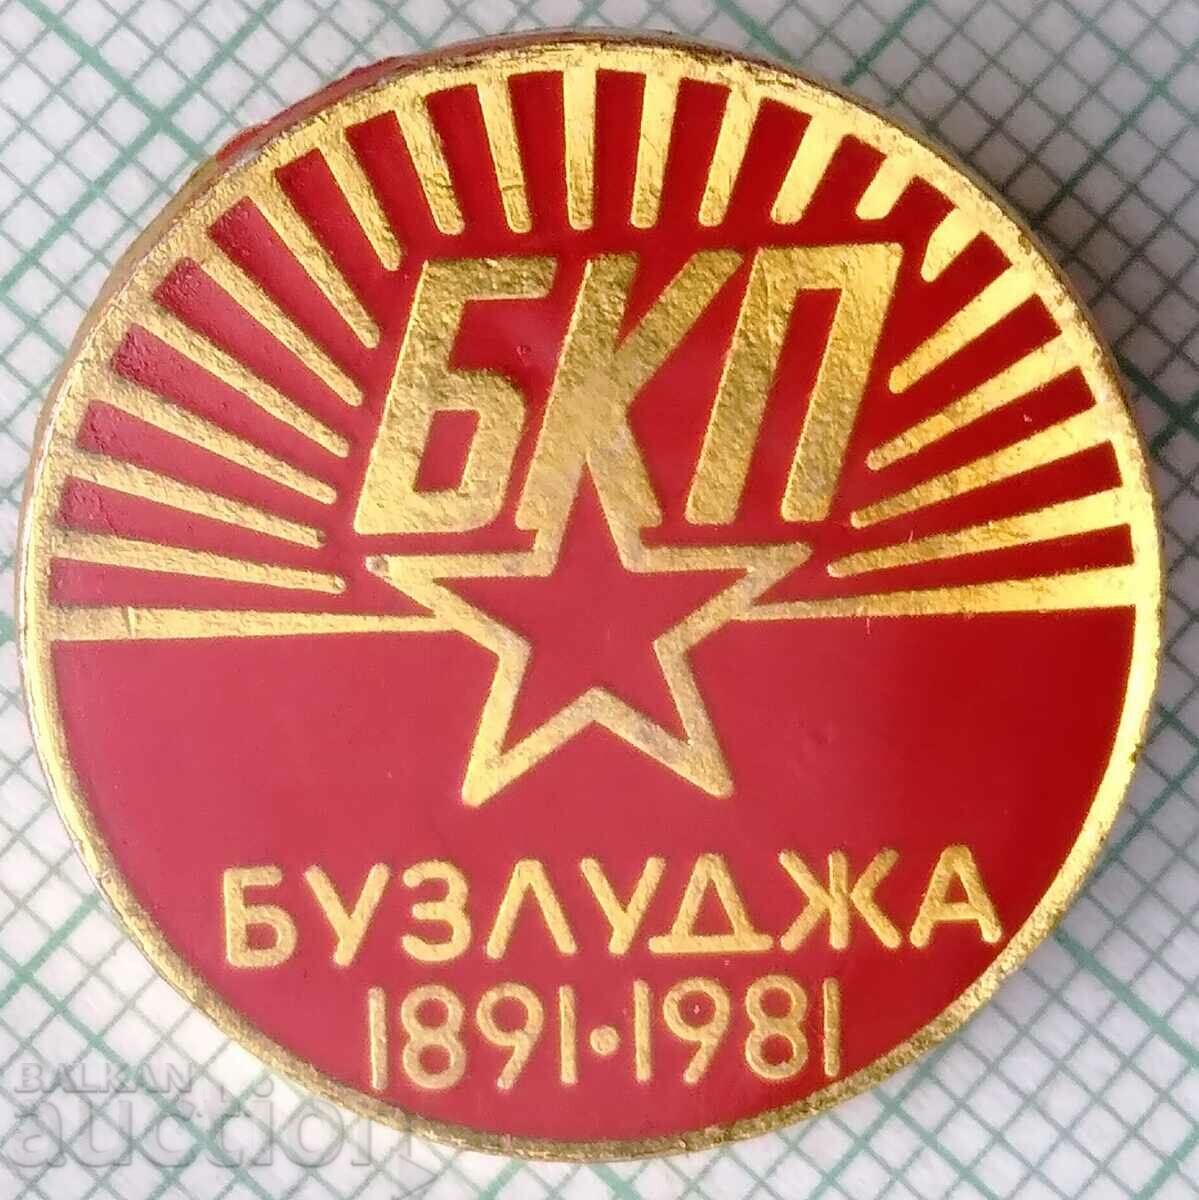 12731 Значка - БКП Бузлуджа 1891-1981